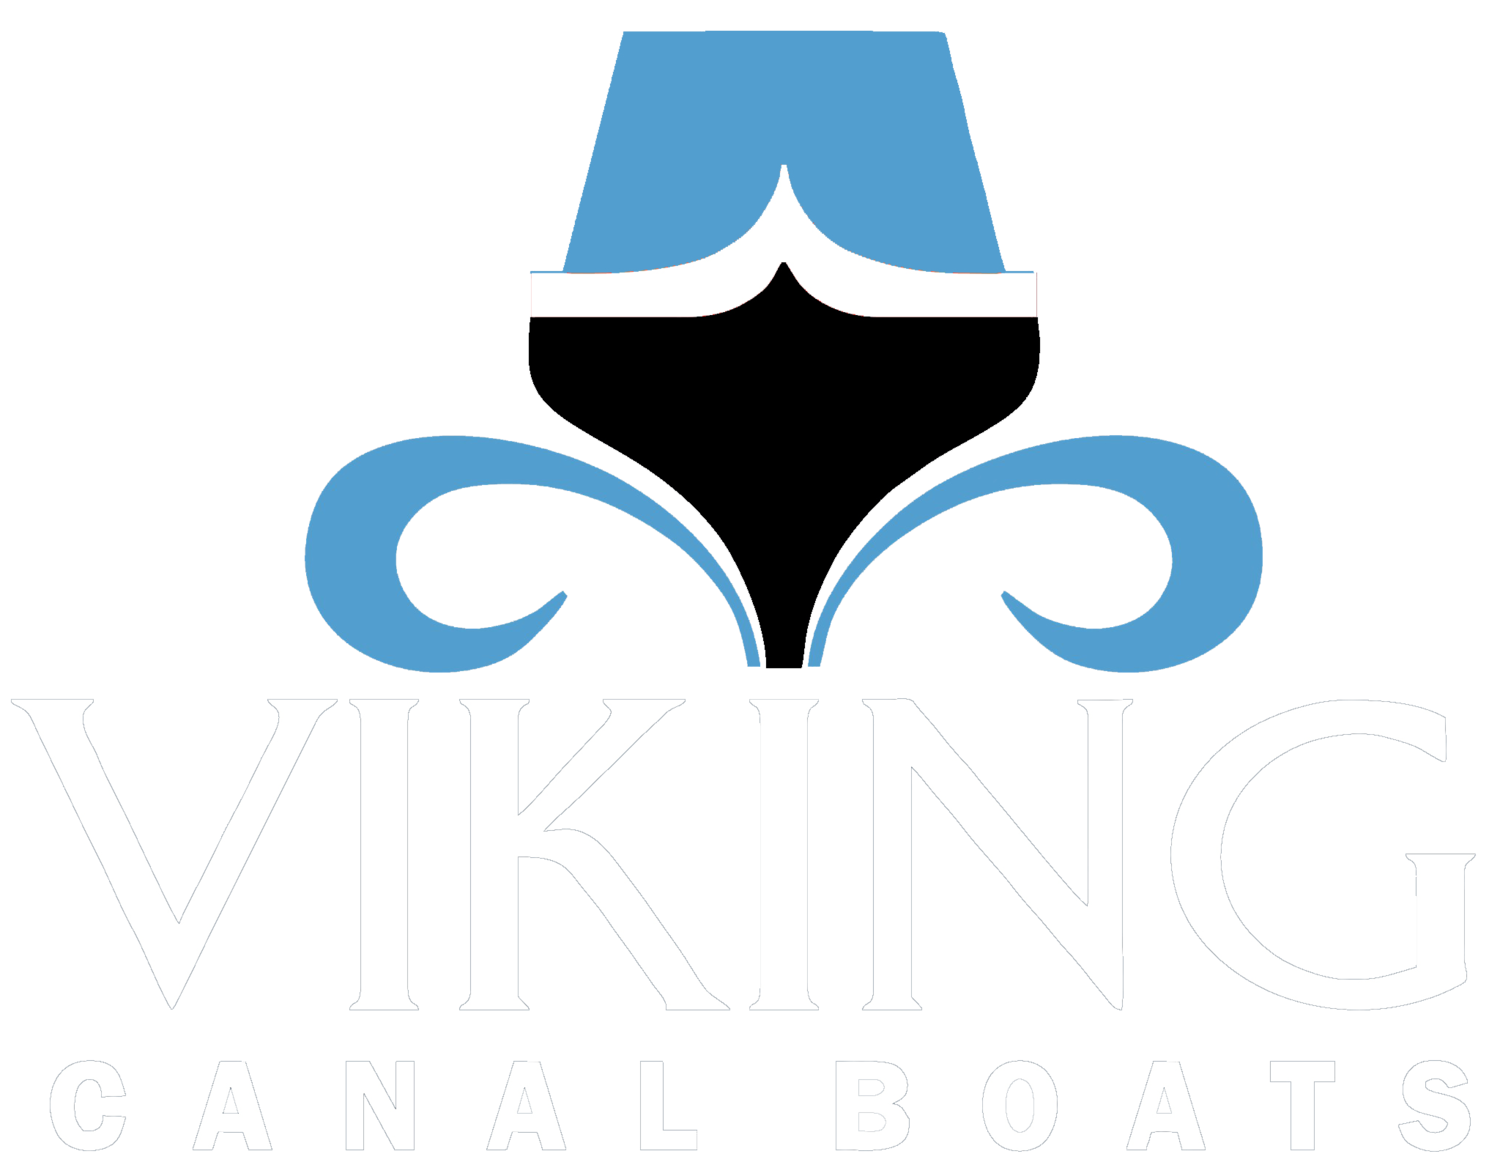  Viking Canal Boats